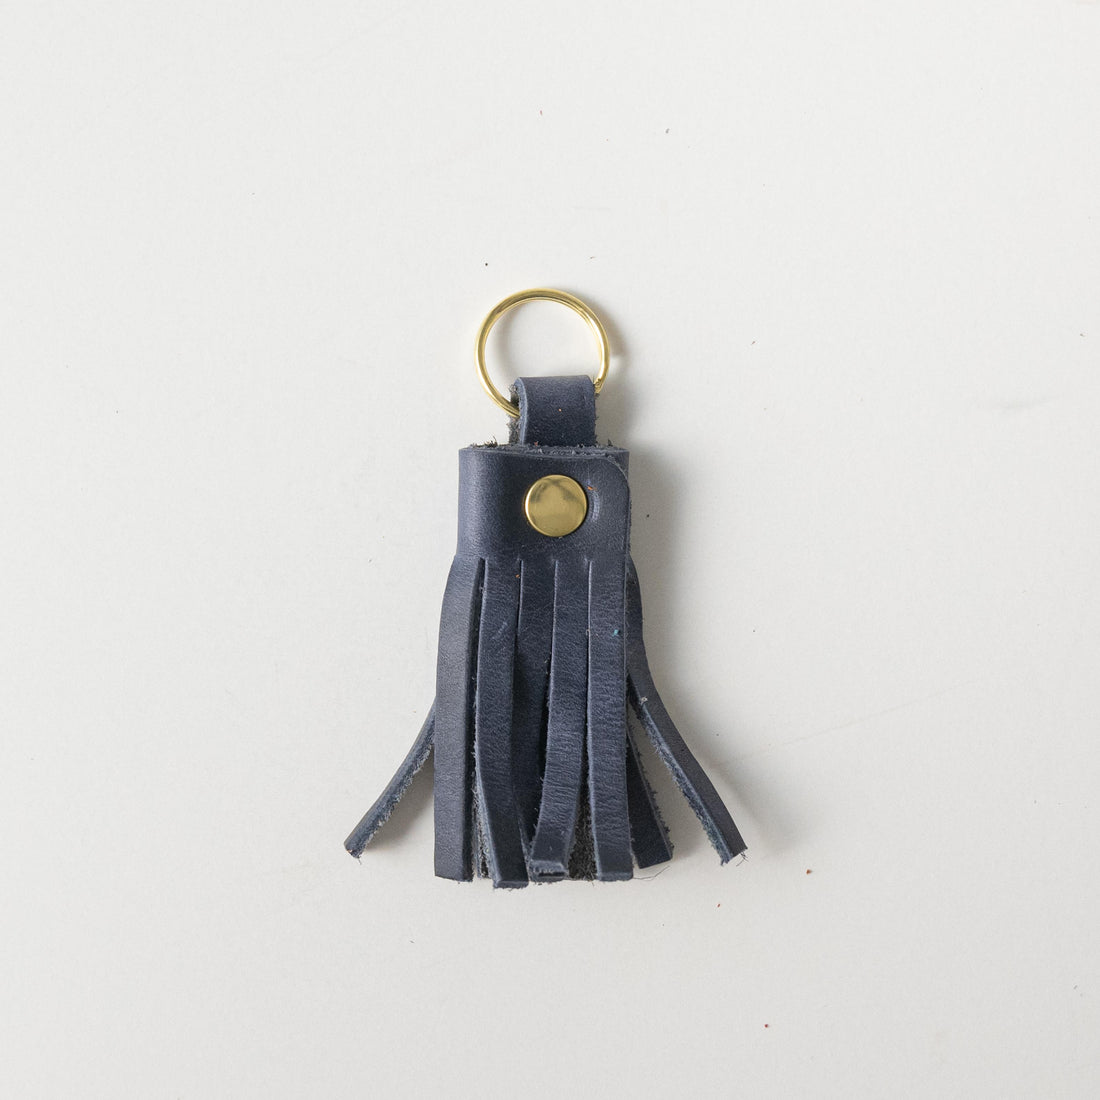 TAP & DYE Handmade Leather Key Fobs, handmade leather key fobs